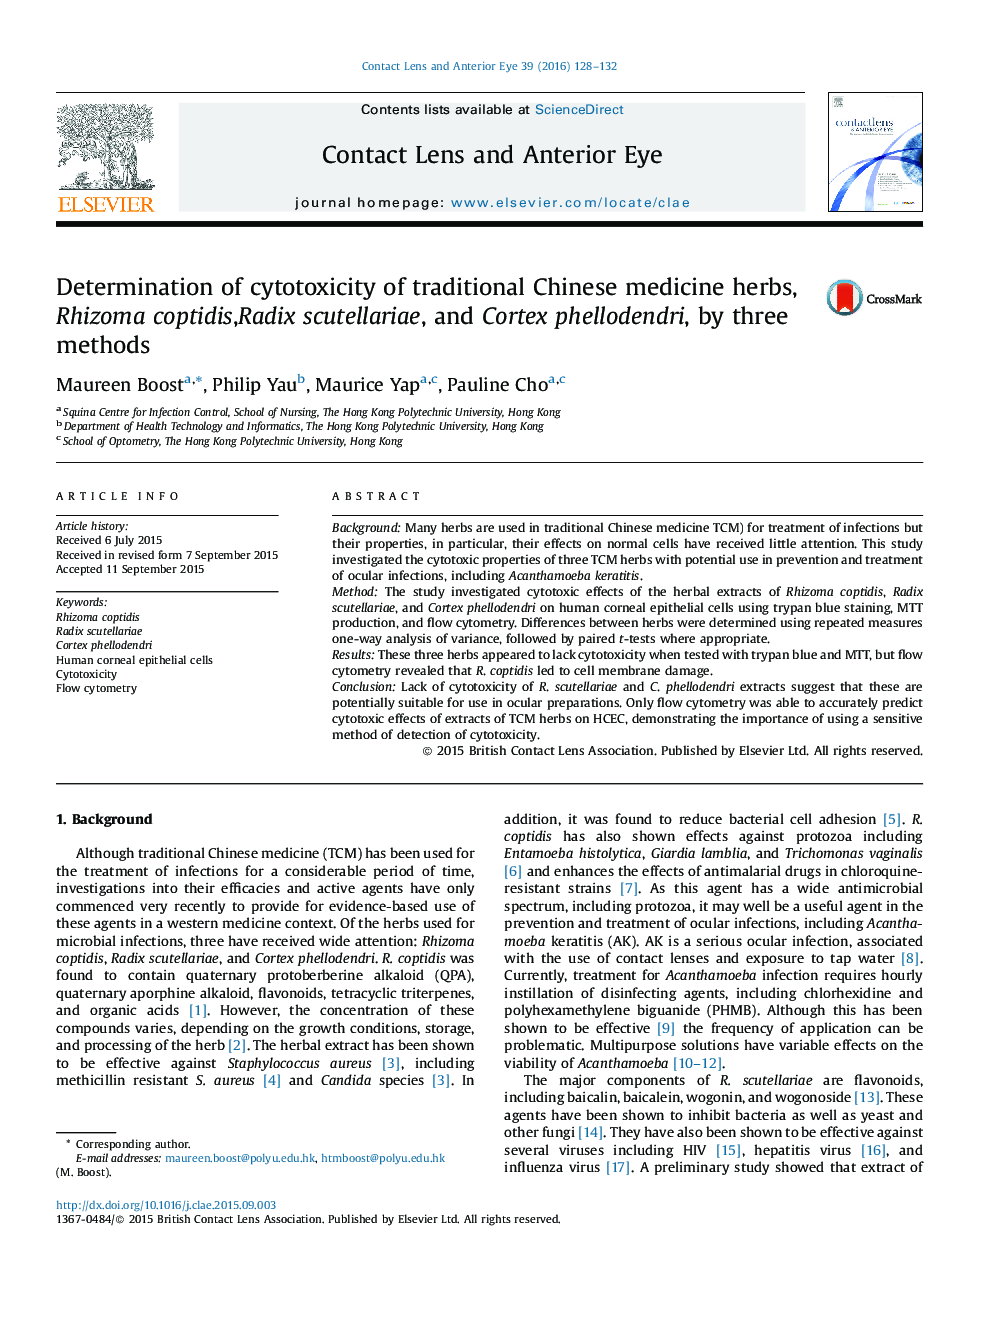 Determination of cytotoxicity of traditional Chinese medicine herbs, Rhizoma coptidis, Radix scutellariae, and Cortex phellodendri, by three methods